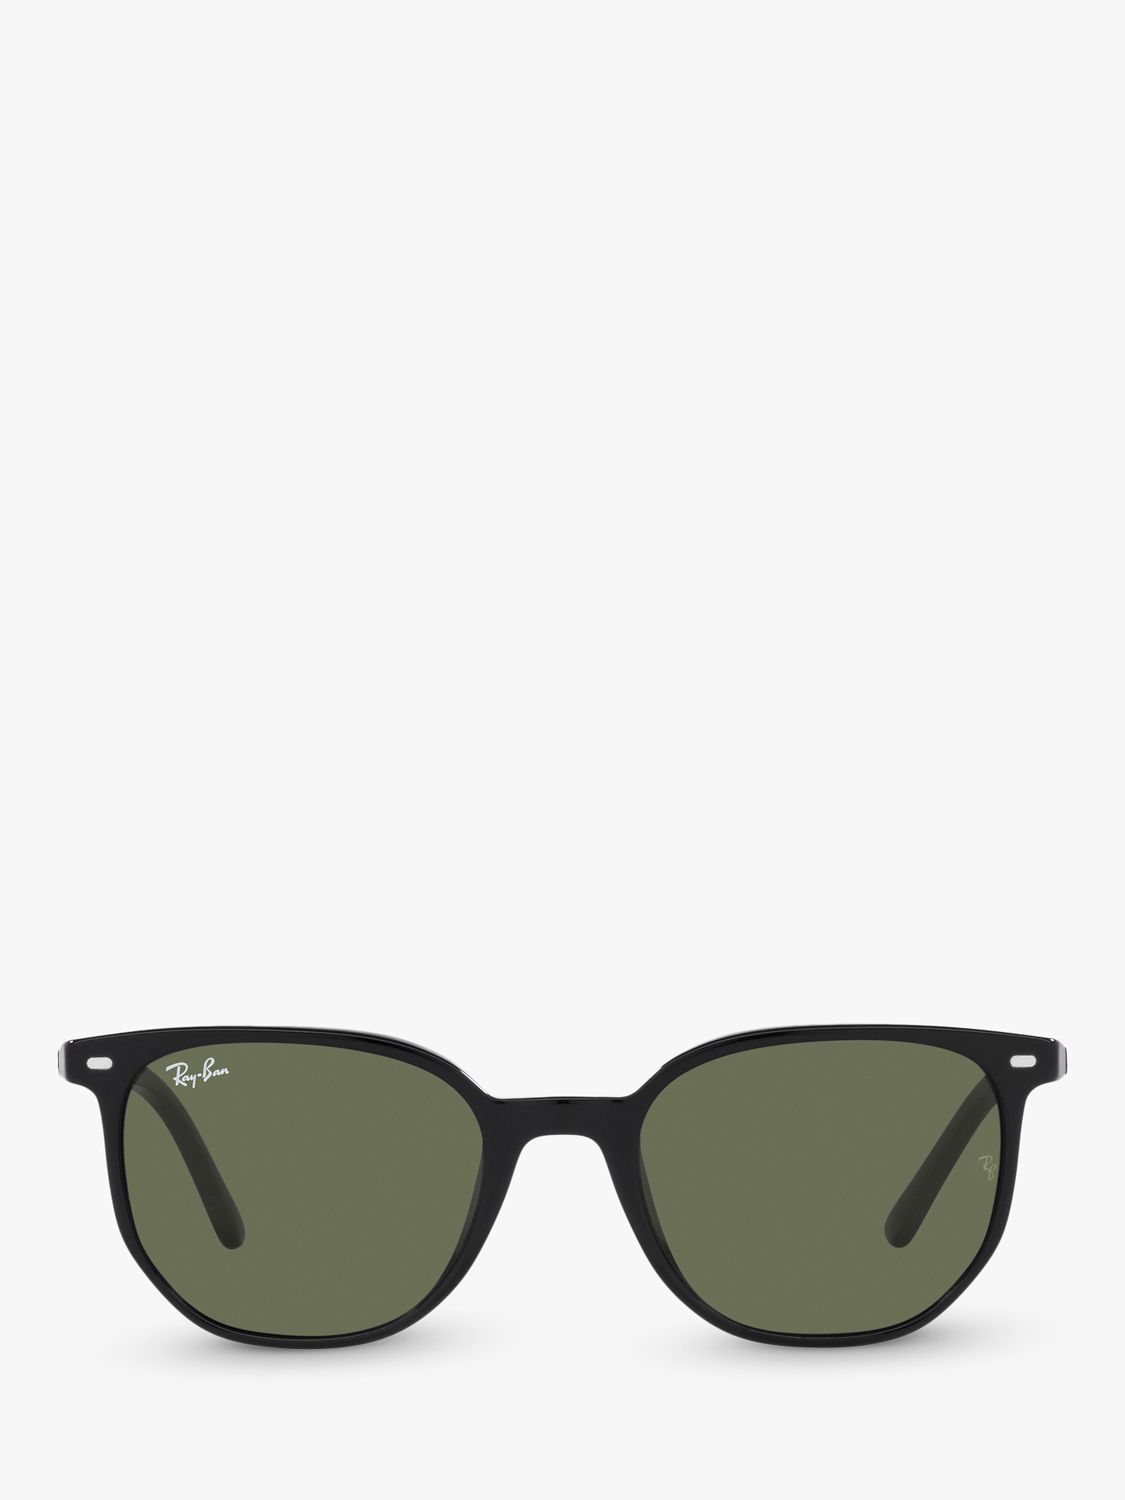 Ray-Ban RB2197 Unisex Elliot Sunglasses, Black/Green